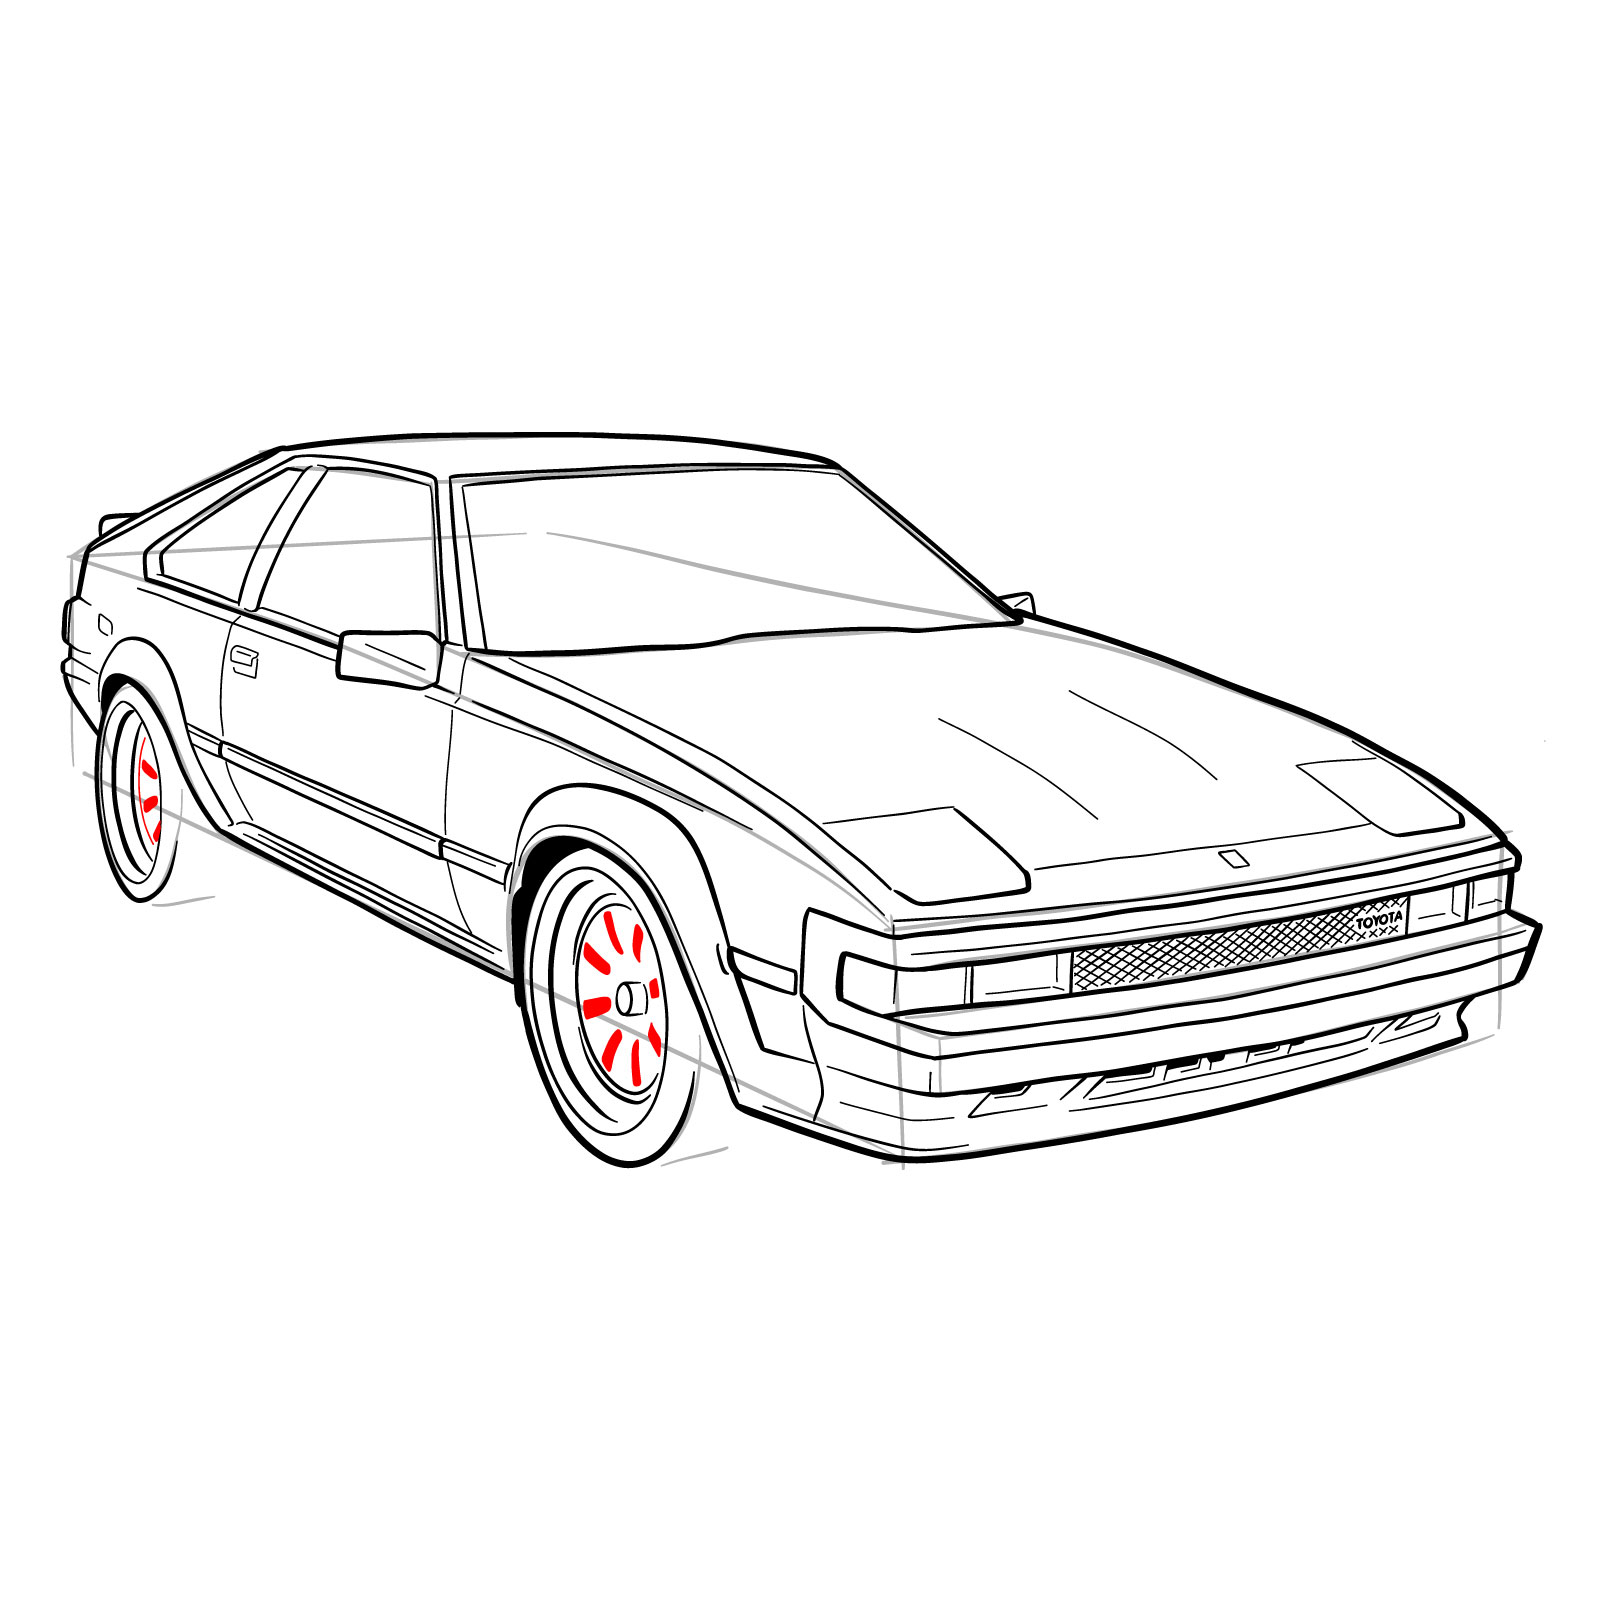 How to draw a 1985 Toyota Celica Supra P Type MK 2 - step 36